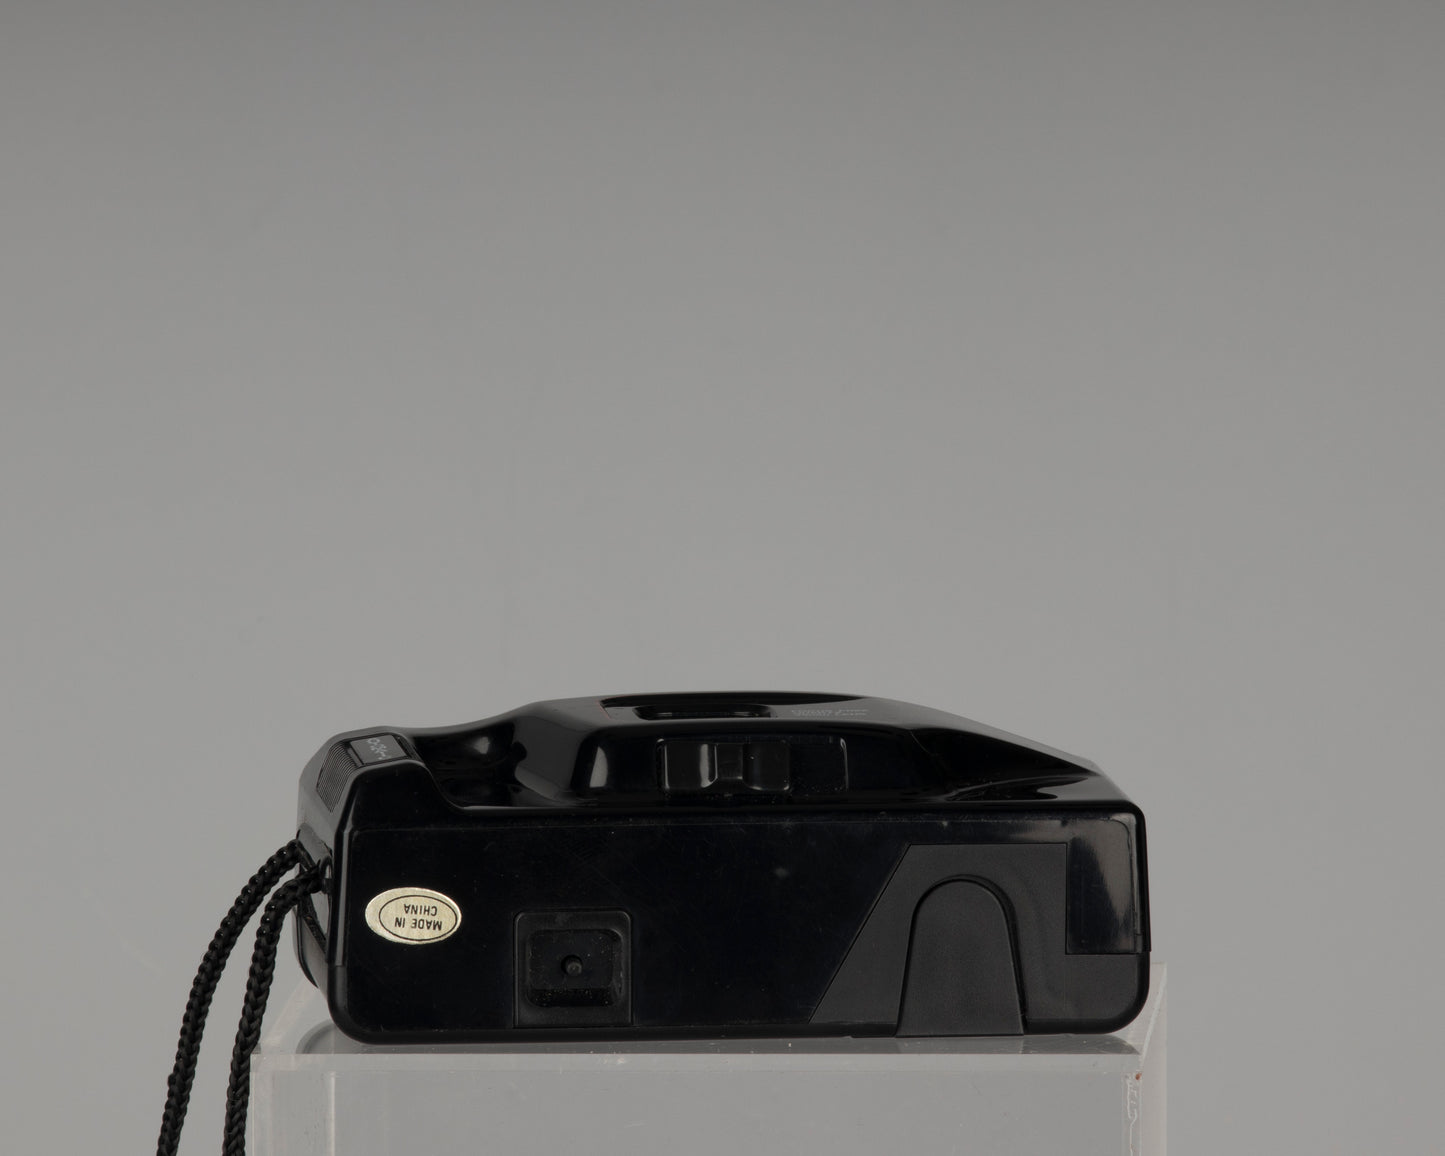 Lokaido GX80D 35mm film camera